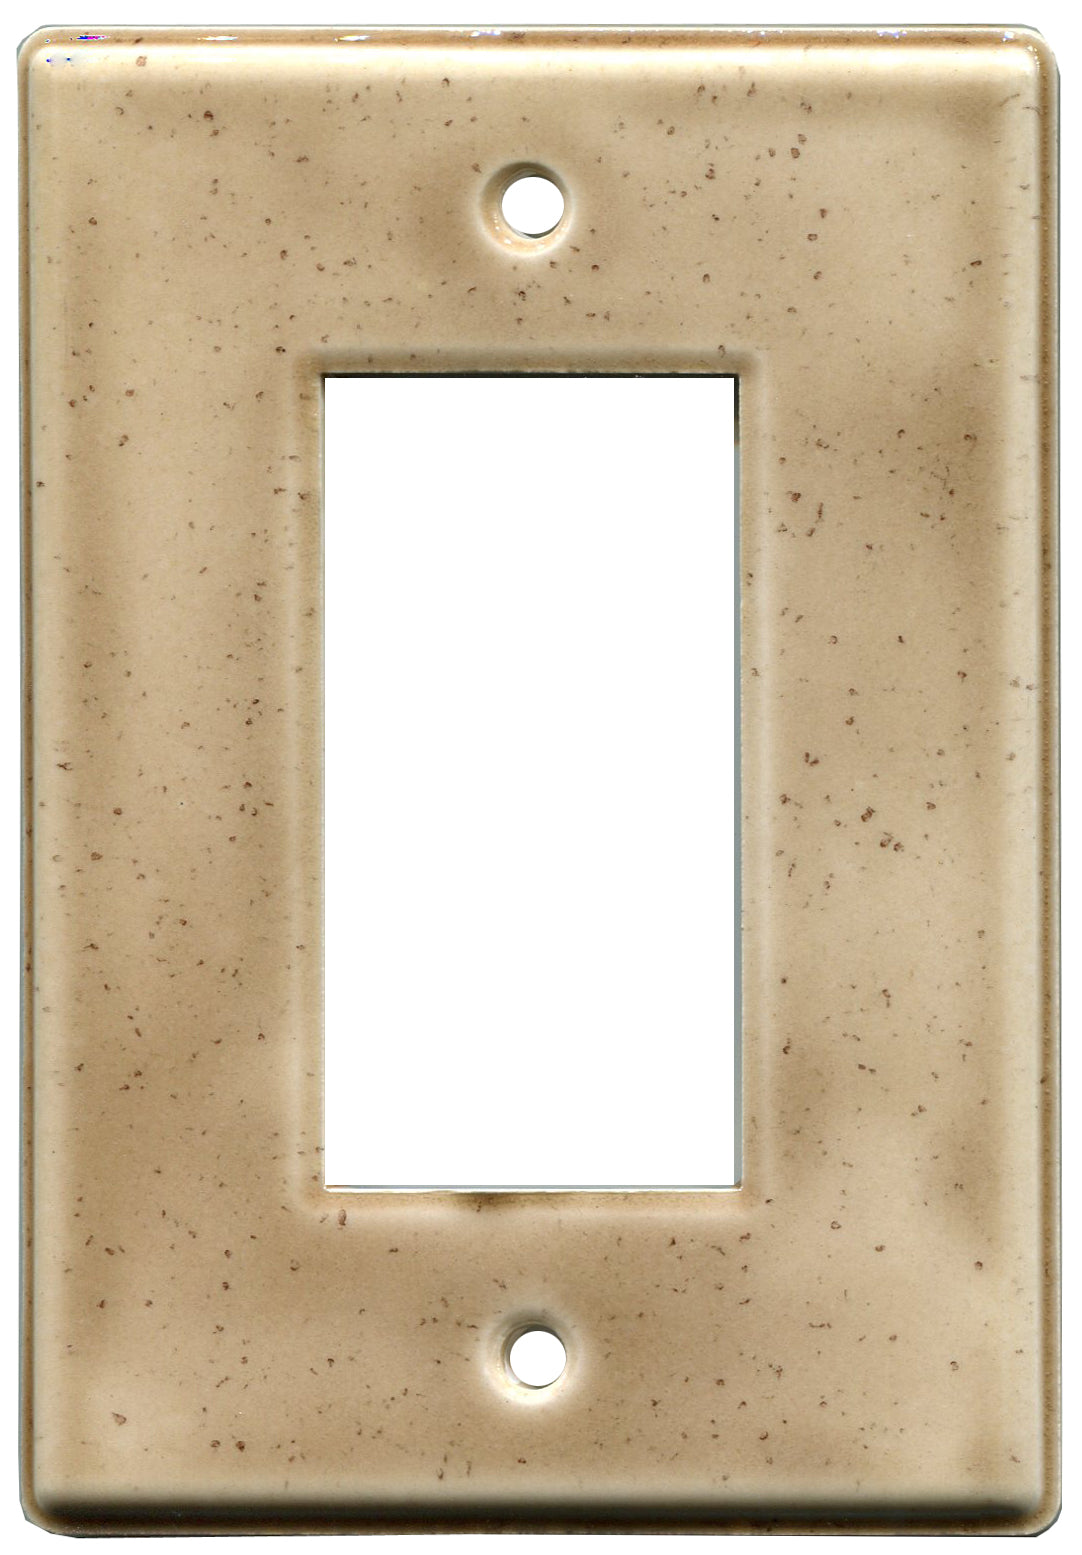 Ash GFI single ceramic switch plate